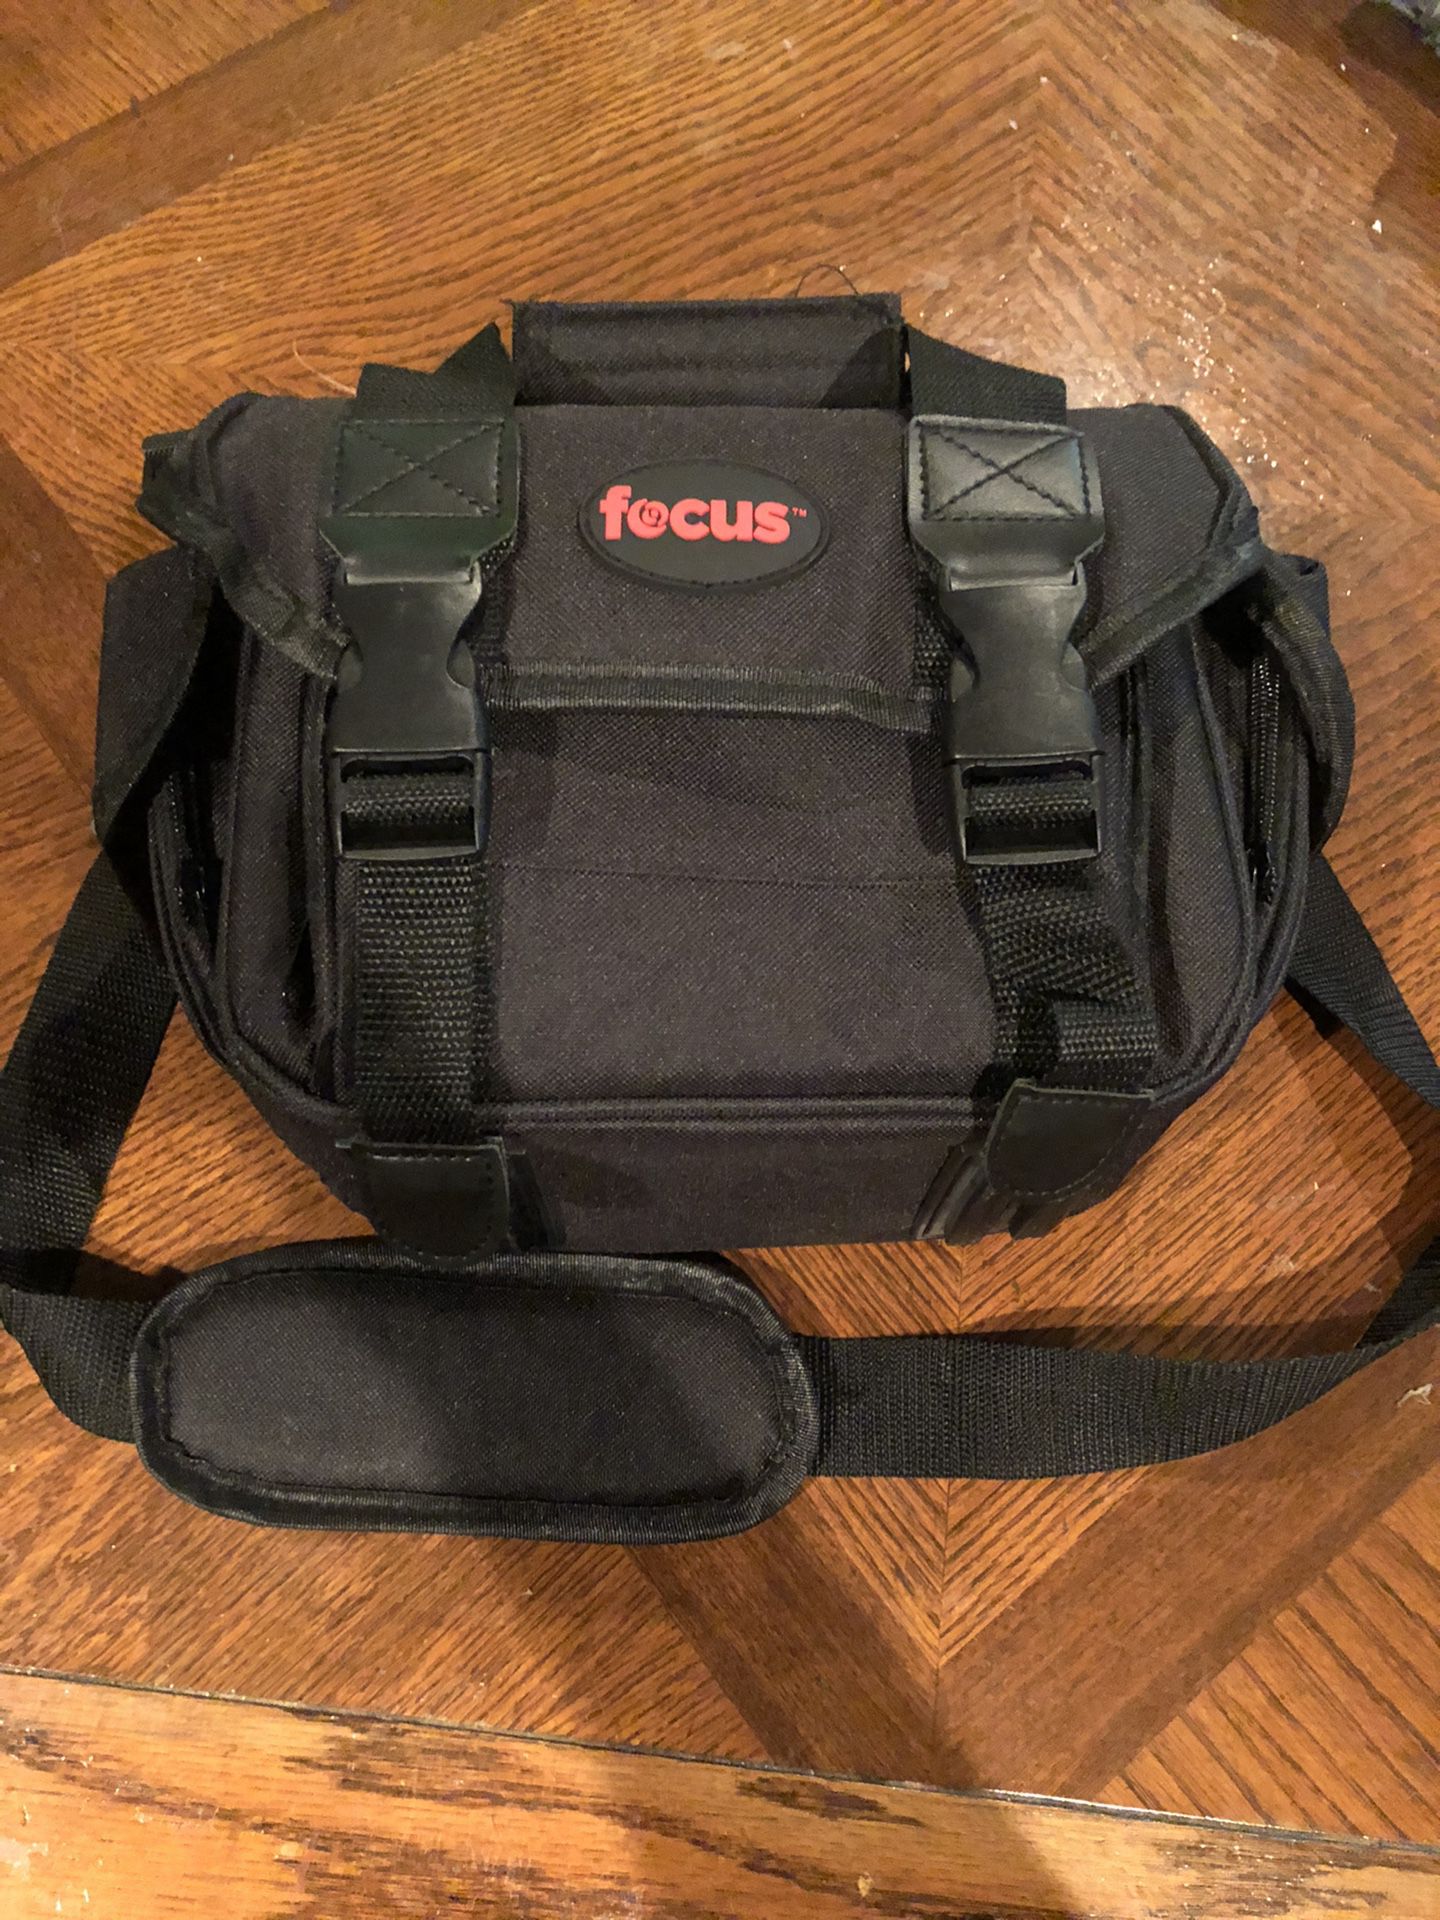 FOCUS Camera Bag